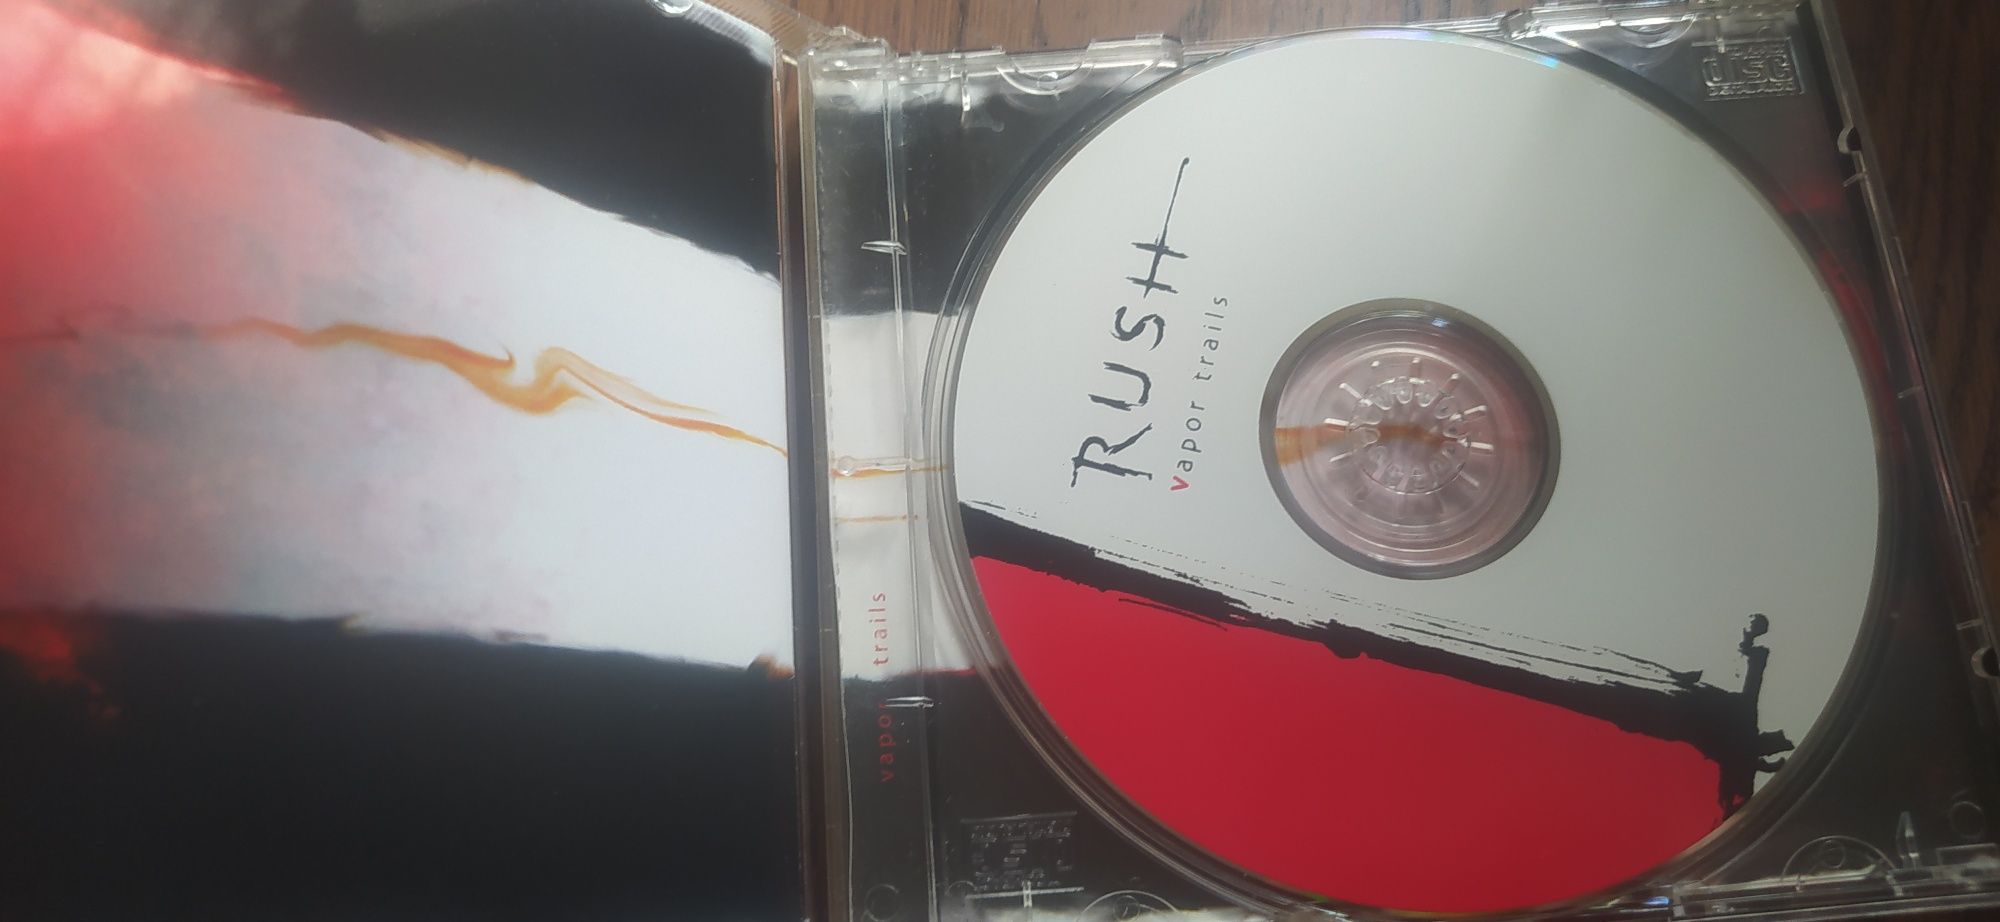 Rush Vapor Trails CD